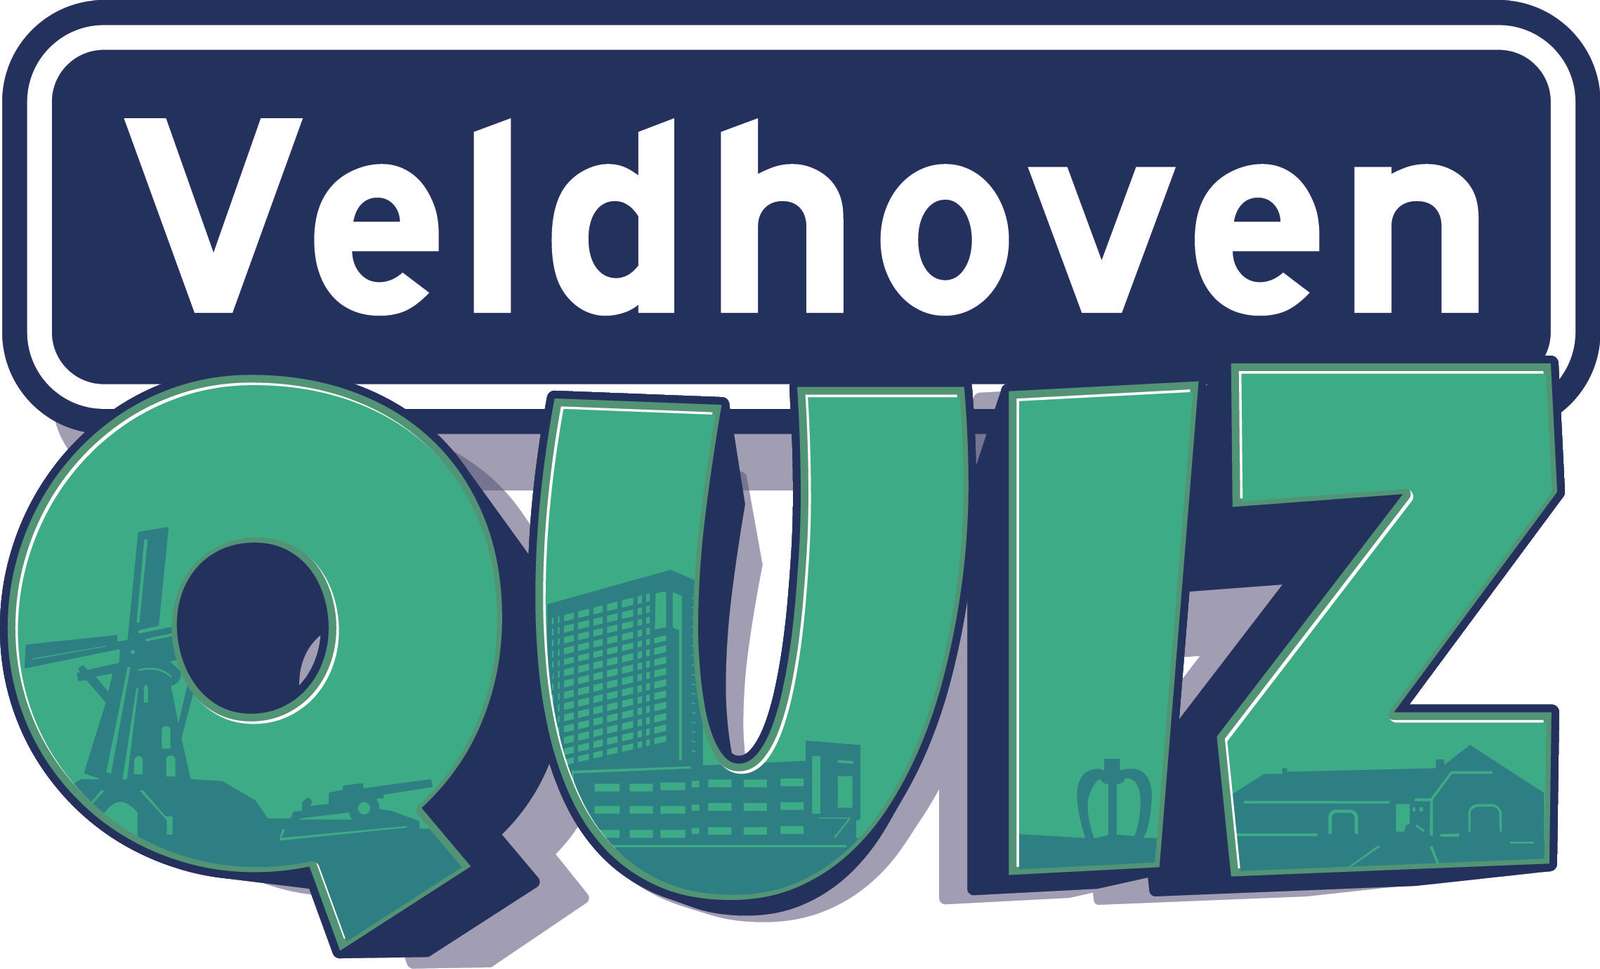 Veldhoven Quiz online puzzle